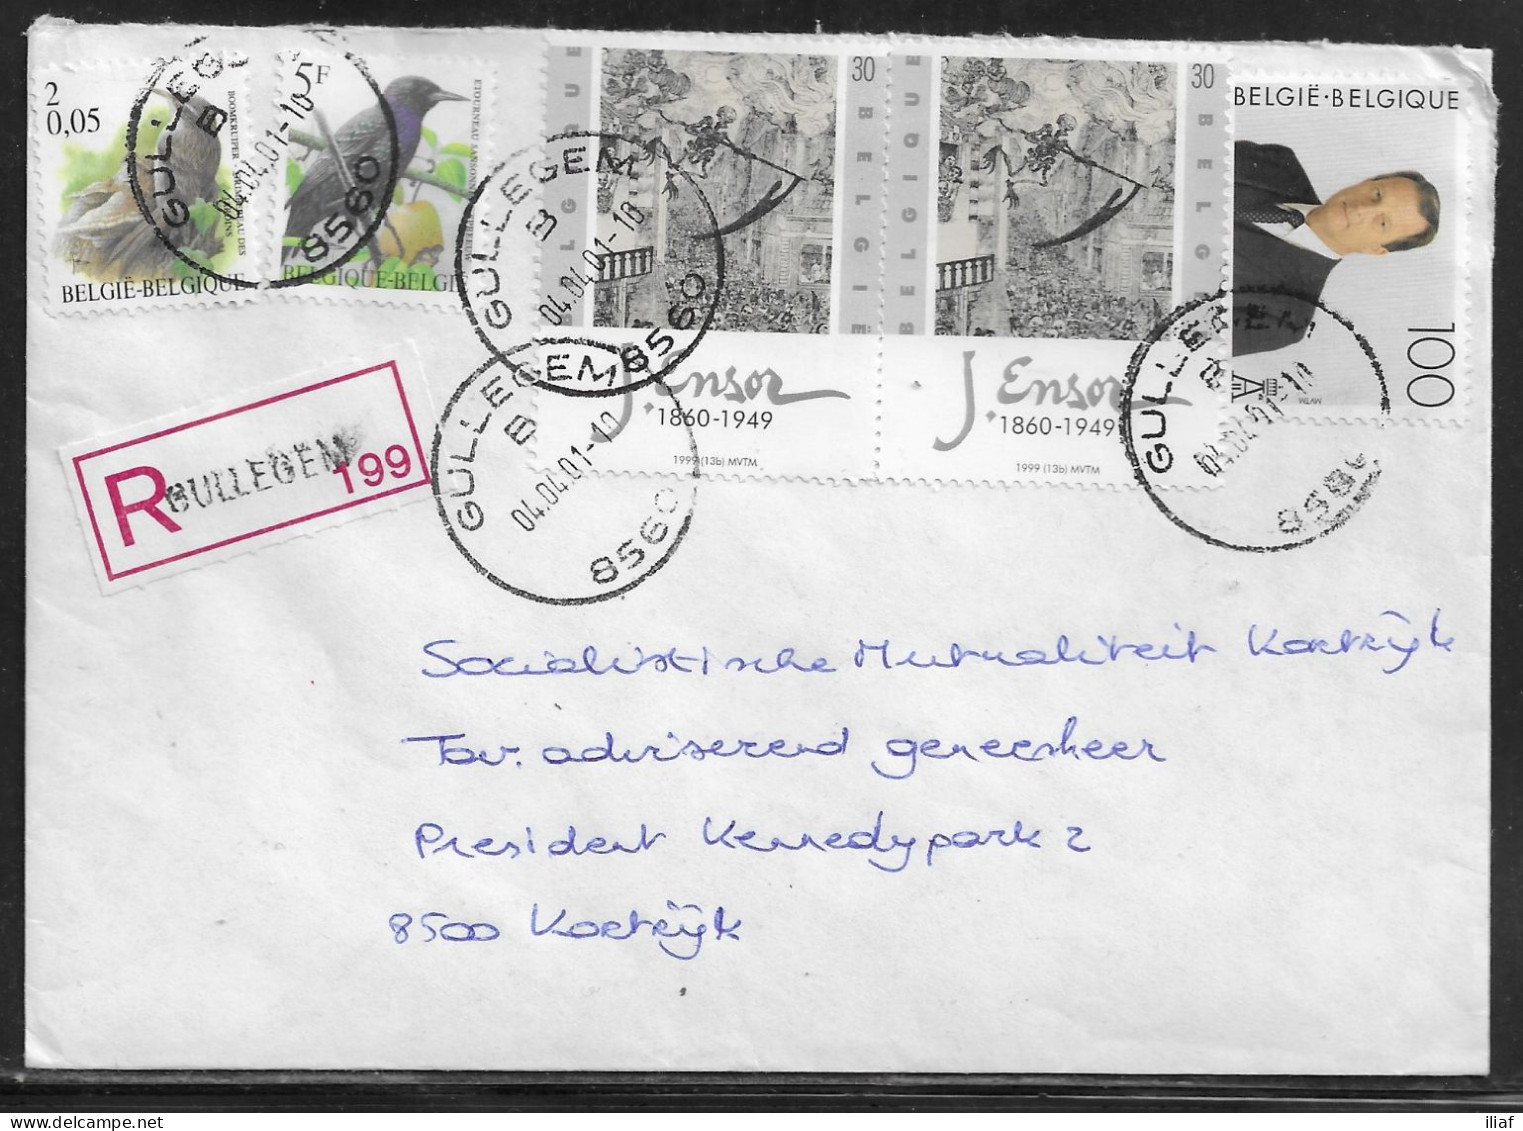 Belgium. Stamps Mi. 2970, Mi. 2690, Mi. 2882, Mi. 2628 on Registered Letter Sent From Gullegem 04.04.2001 for Kortrijk - Lettres & Documents